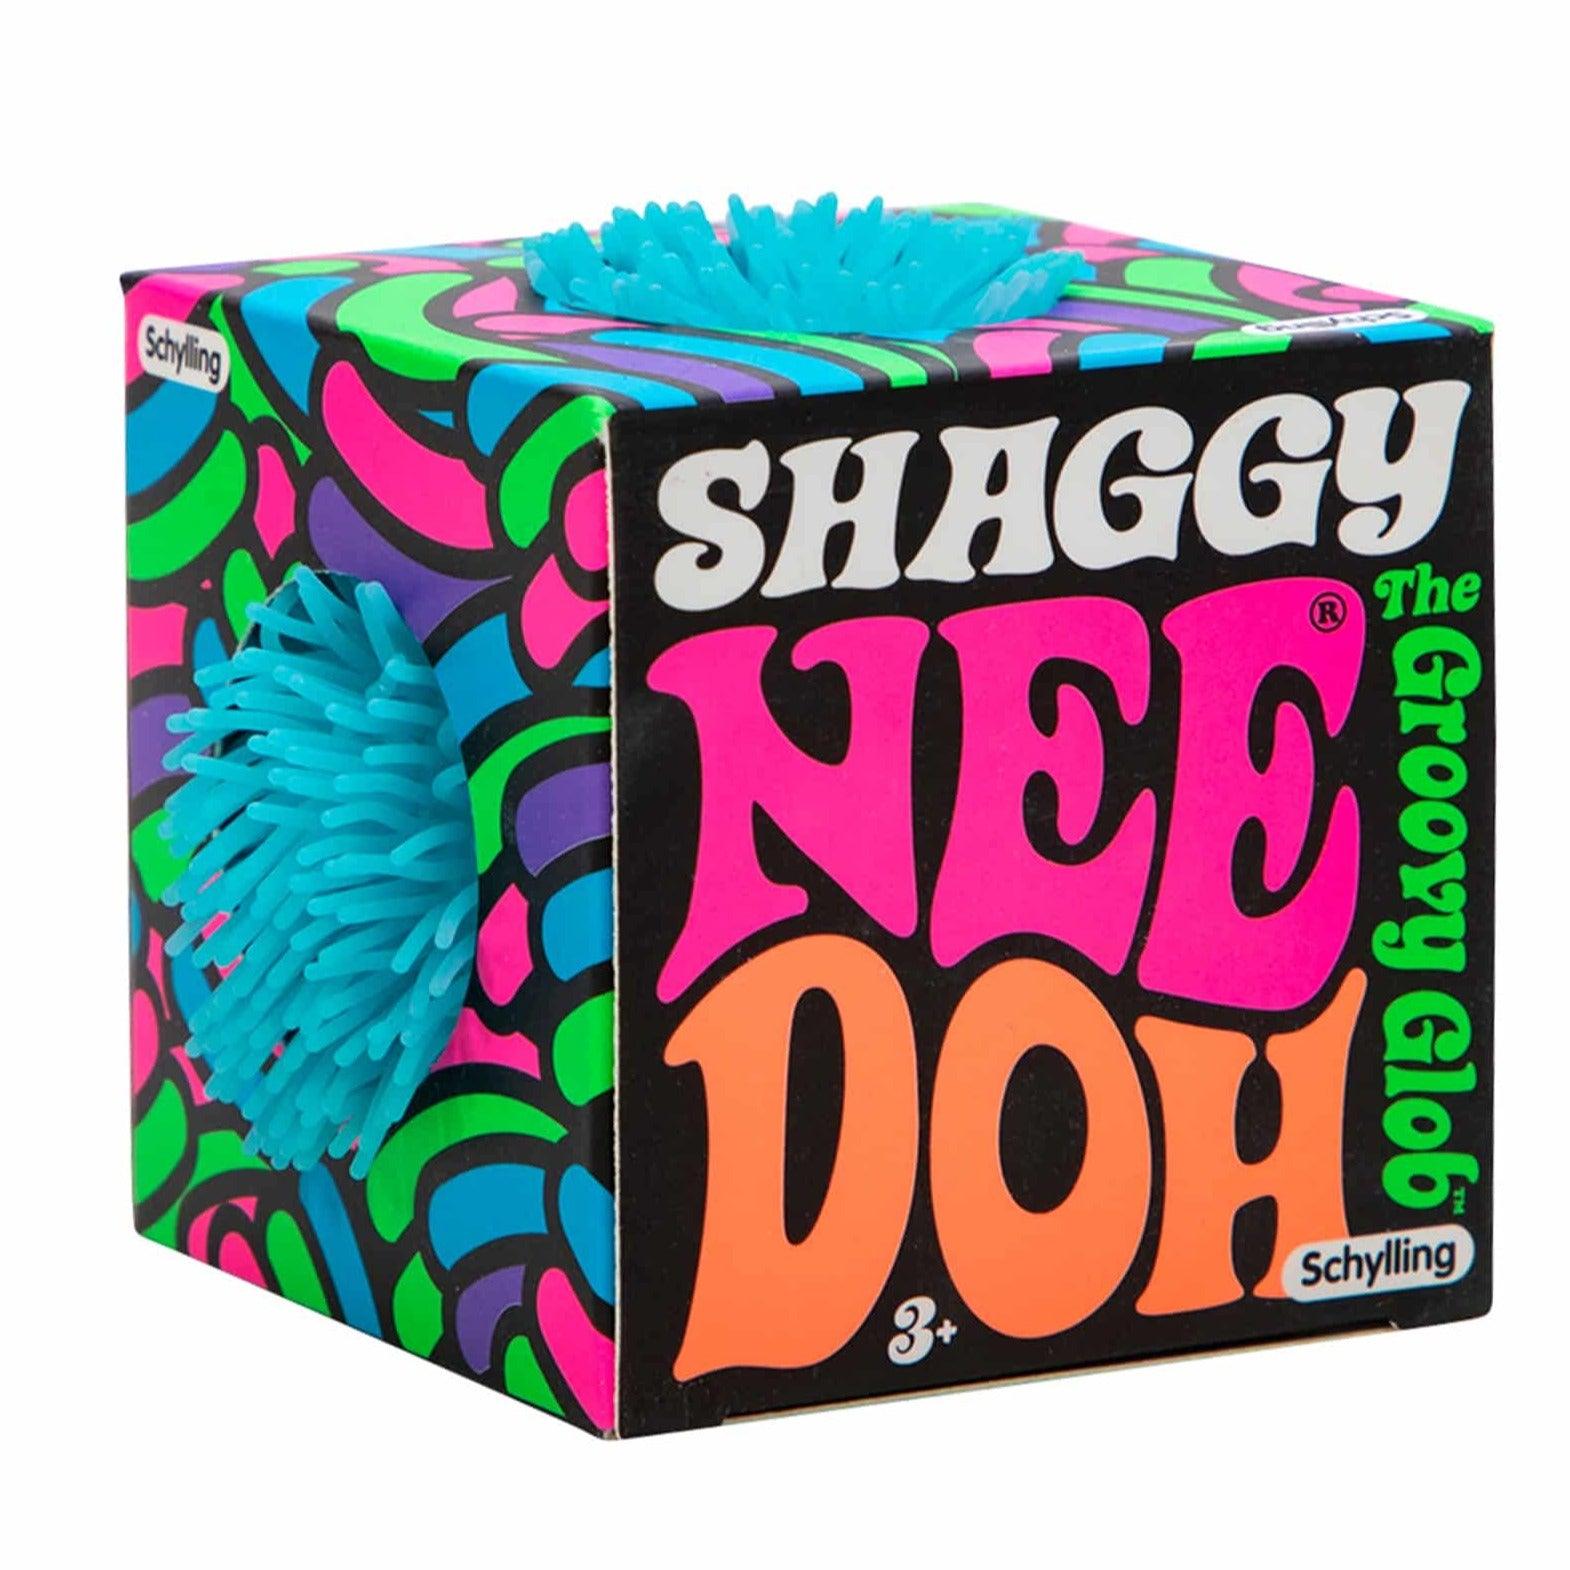 Schylling: Shaggy Neetoh Sensory Squash